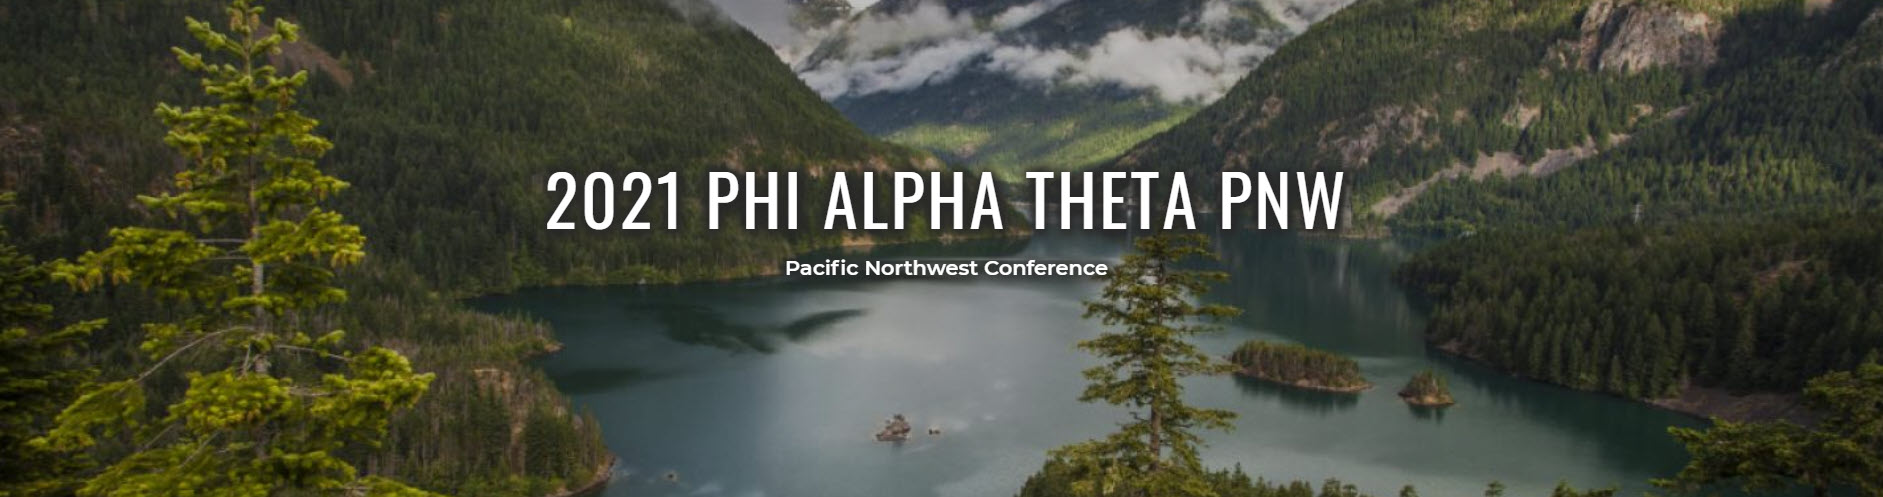 Phi Alpha Theta Pacific Northwest Regional Conference